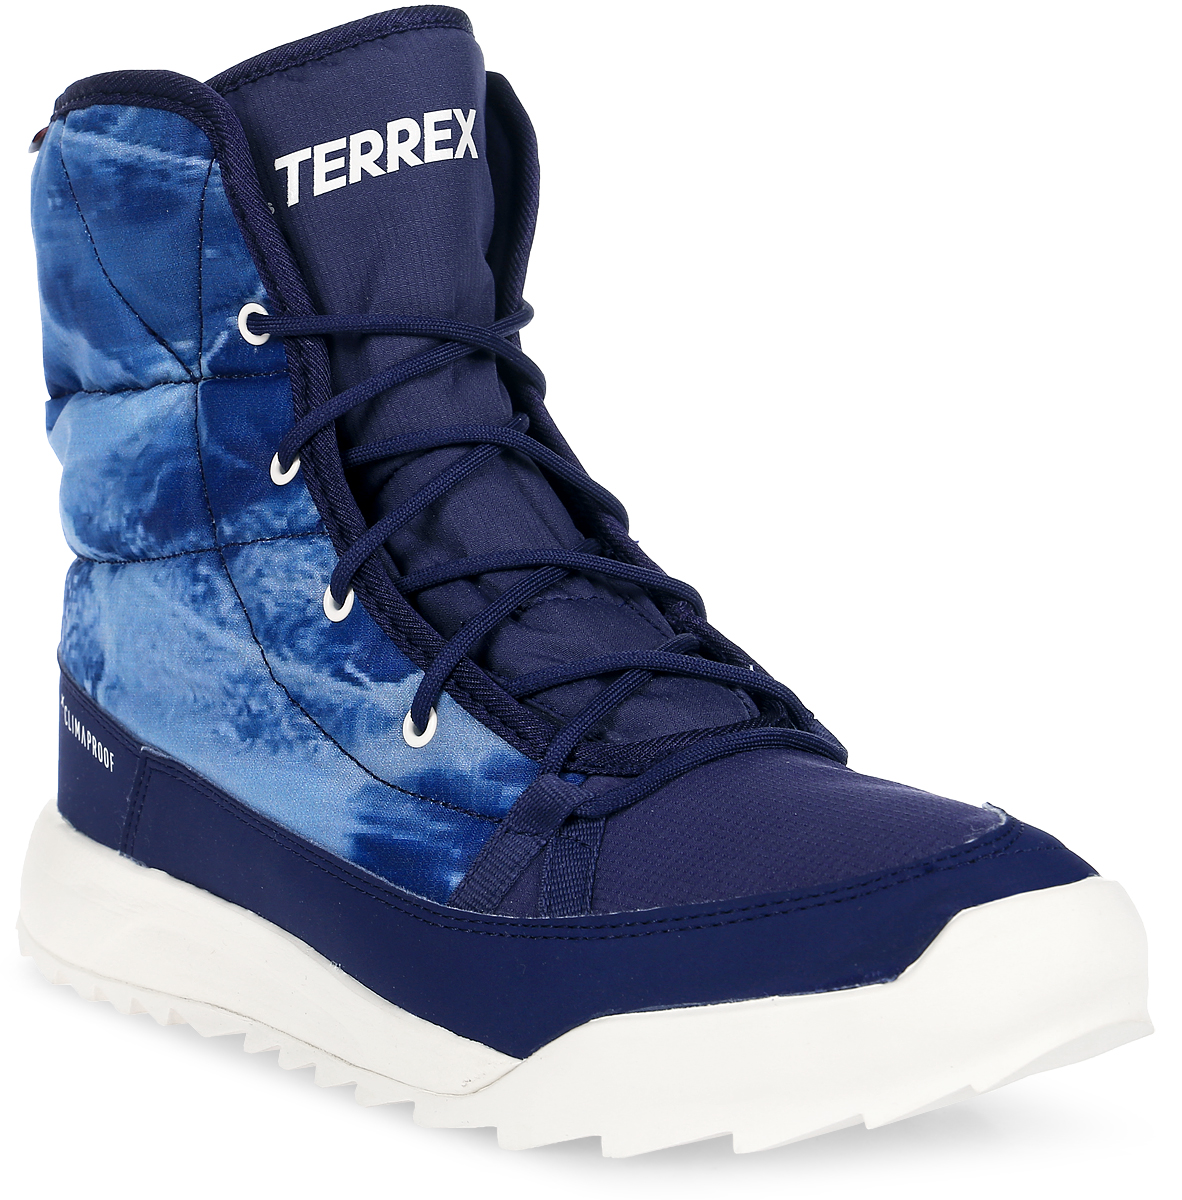 Ботинки женские Adidas Terrex Choleah Padd, цвет: синий. BY9082. Размер 6 (38)